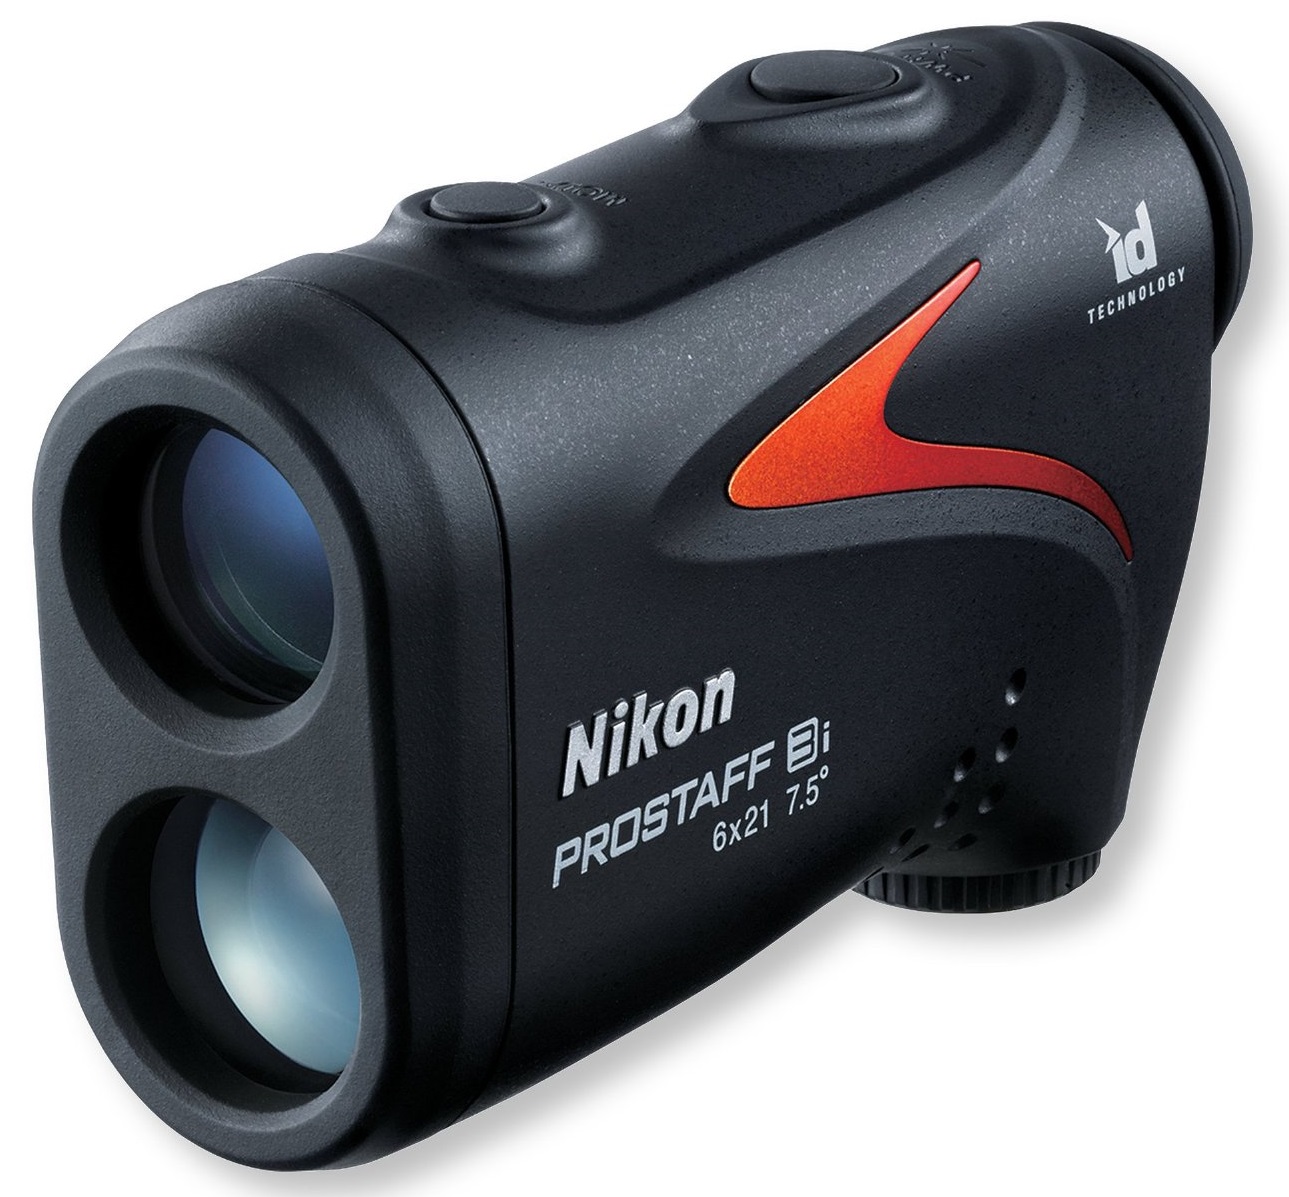 Nikon Prostaff 3i Golf Laser Rangefinders